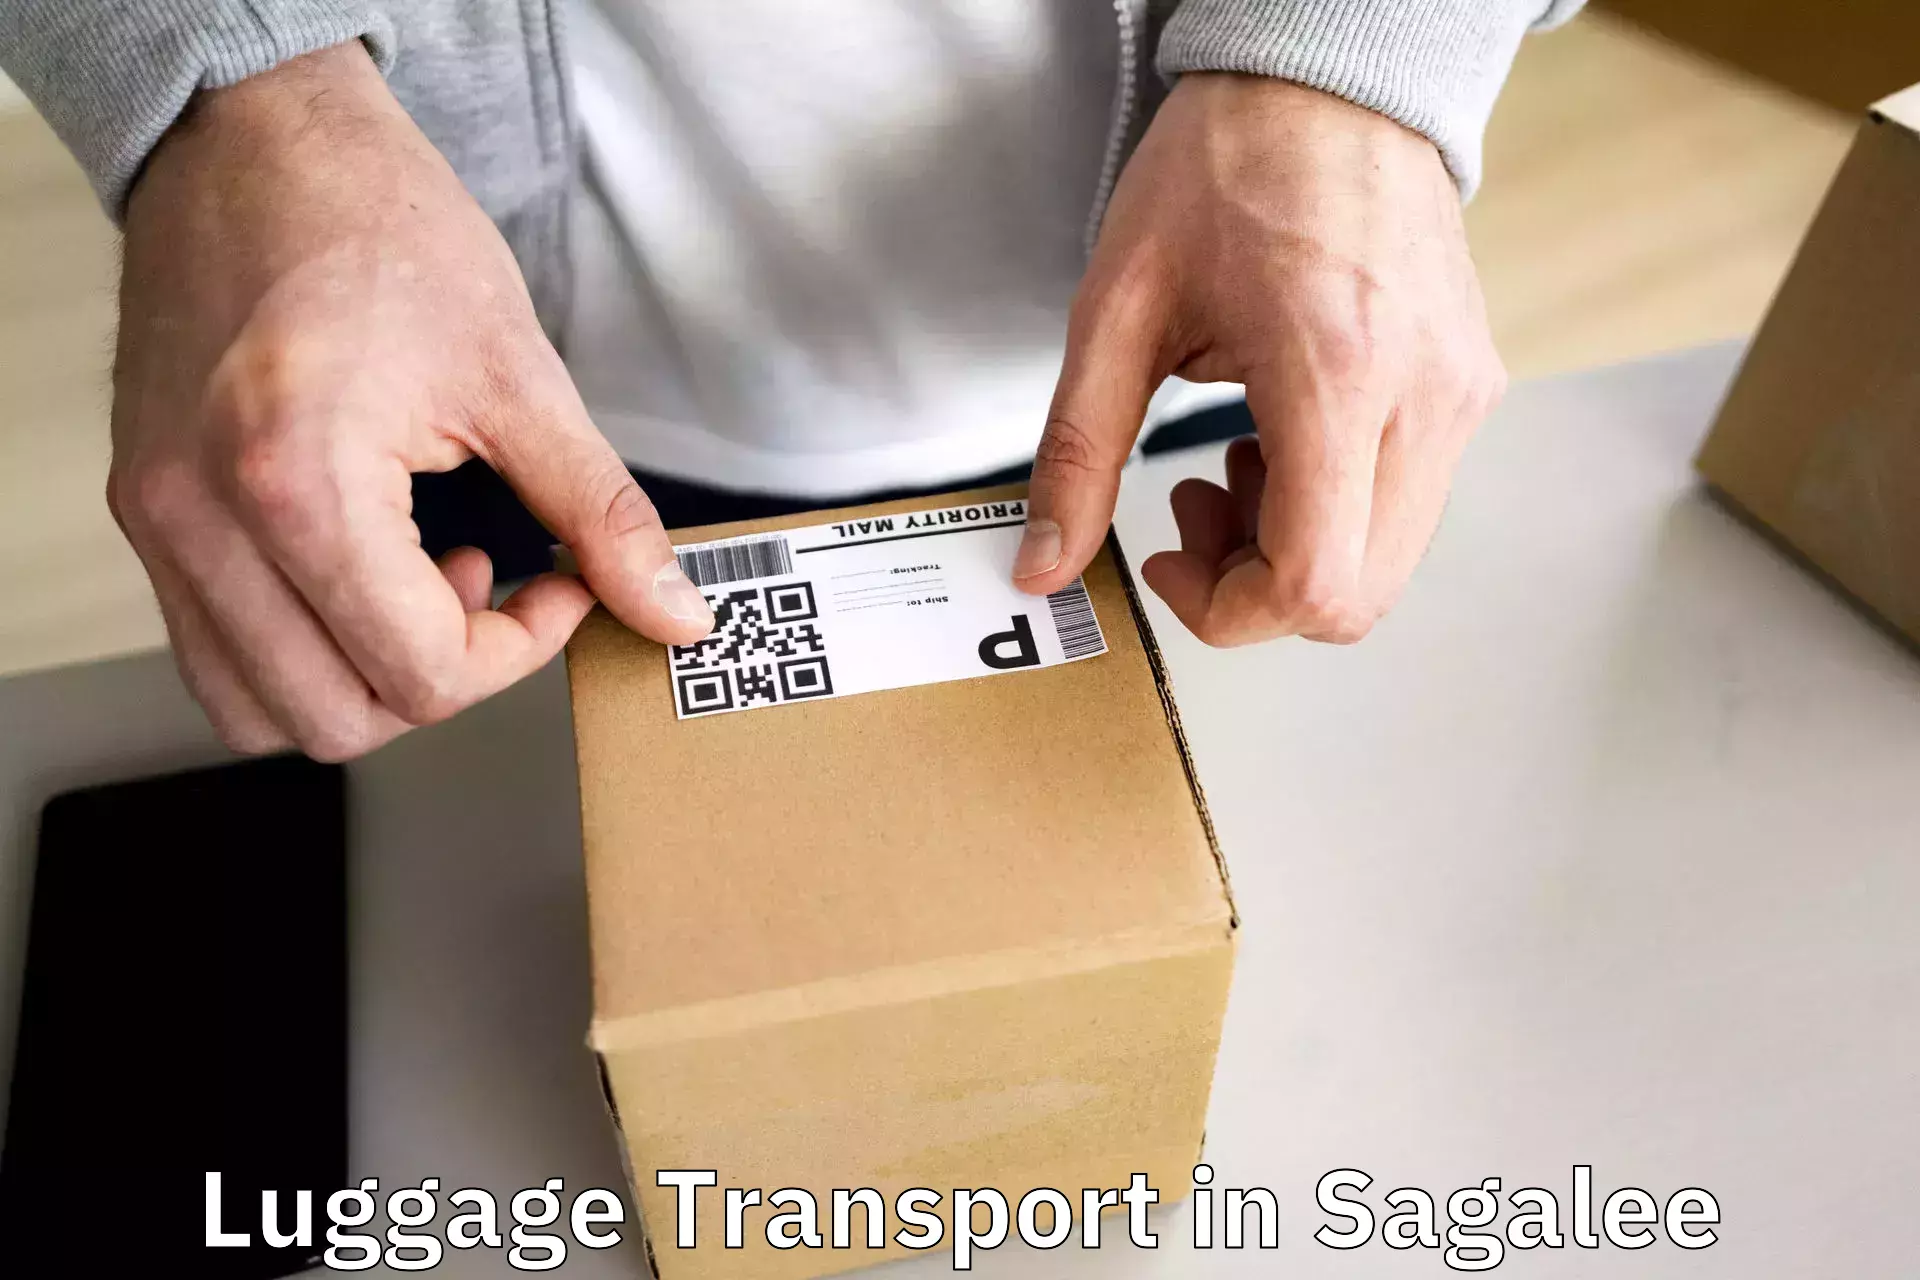 Baggage transport innovation in Sagalee